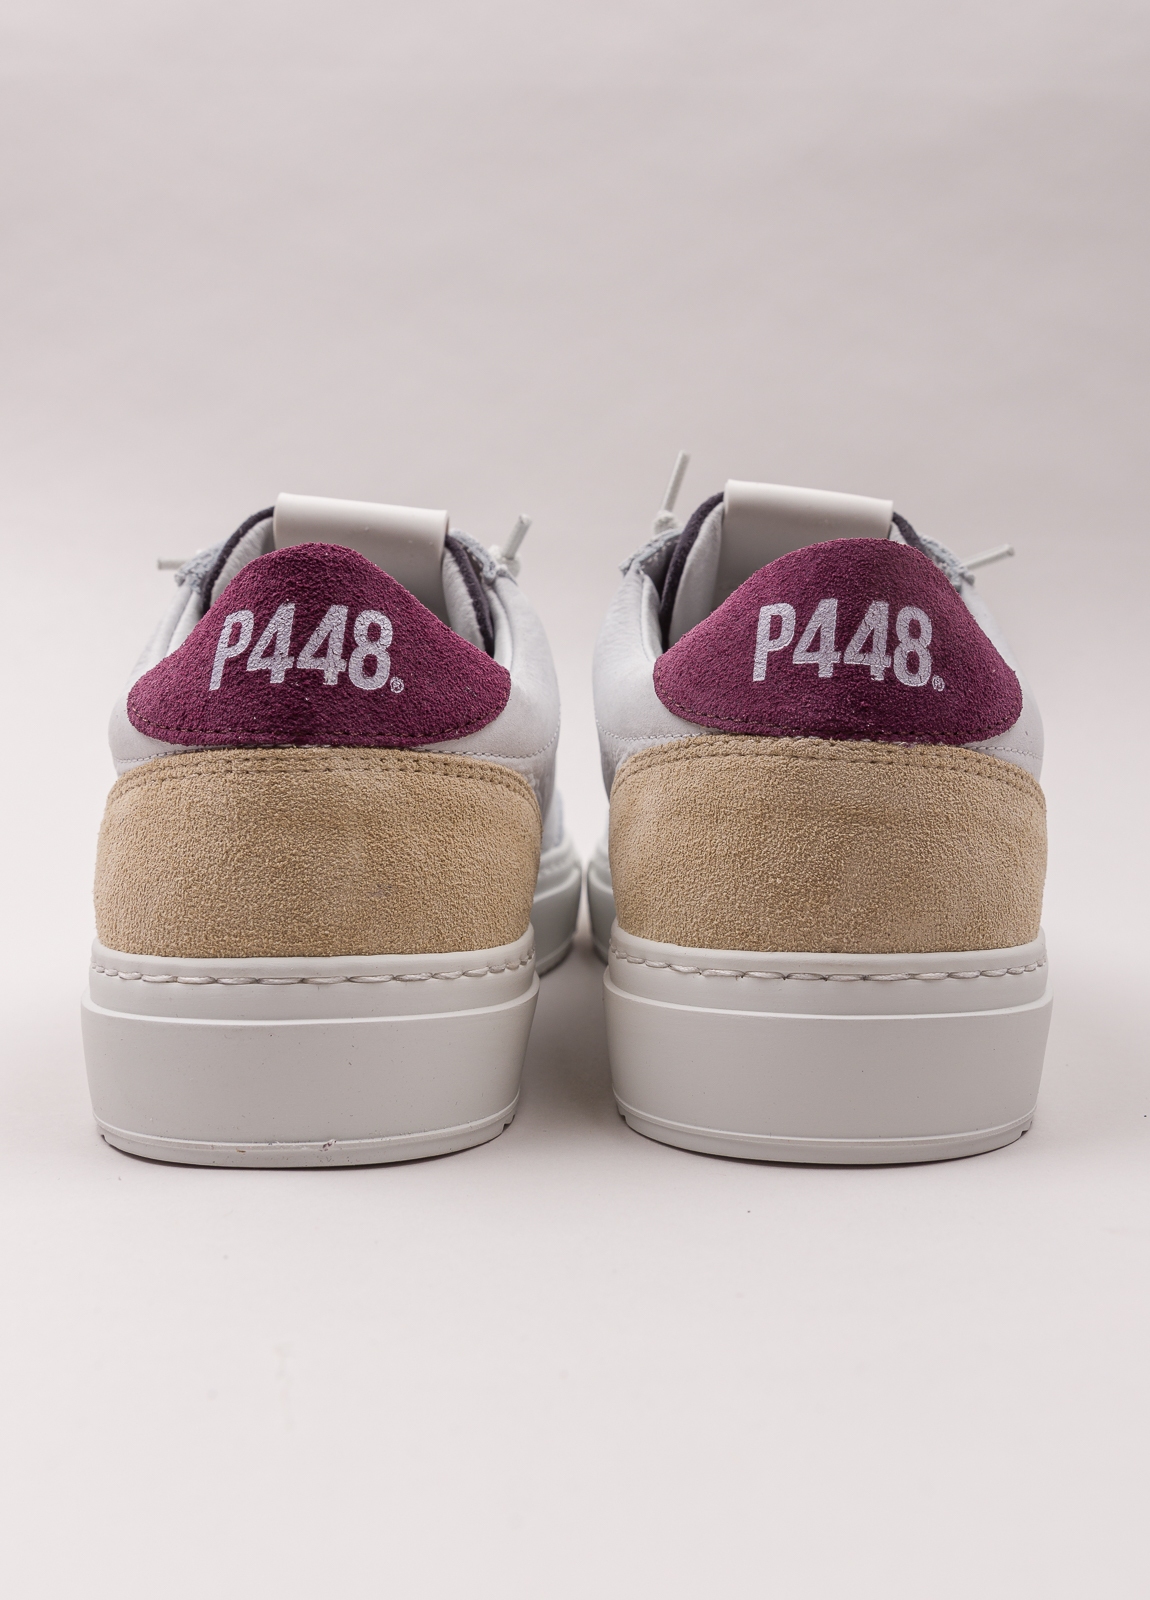 Sneaker P448 blanca y fuxia - Ítem1